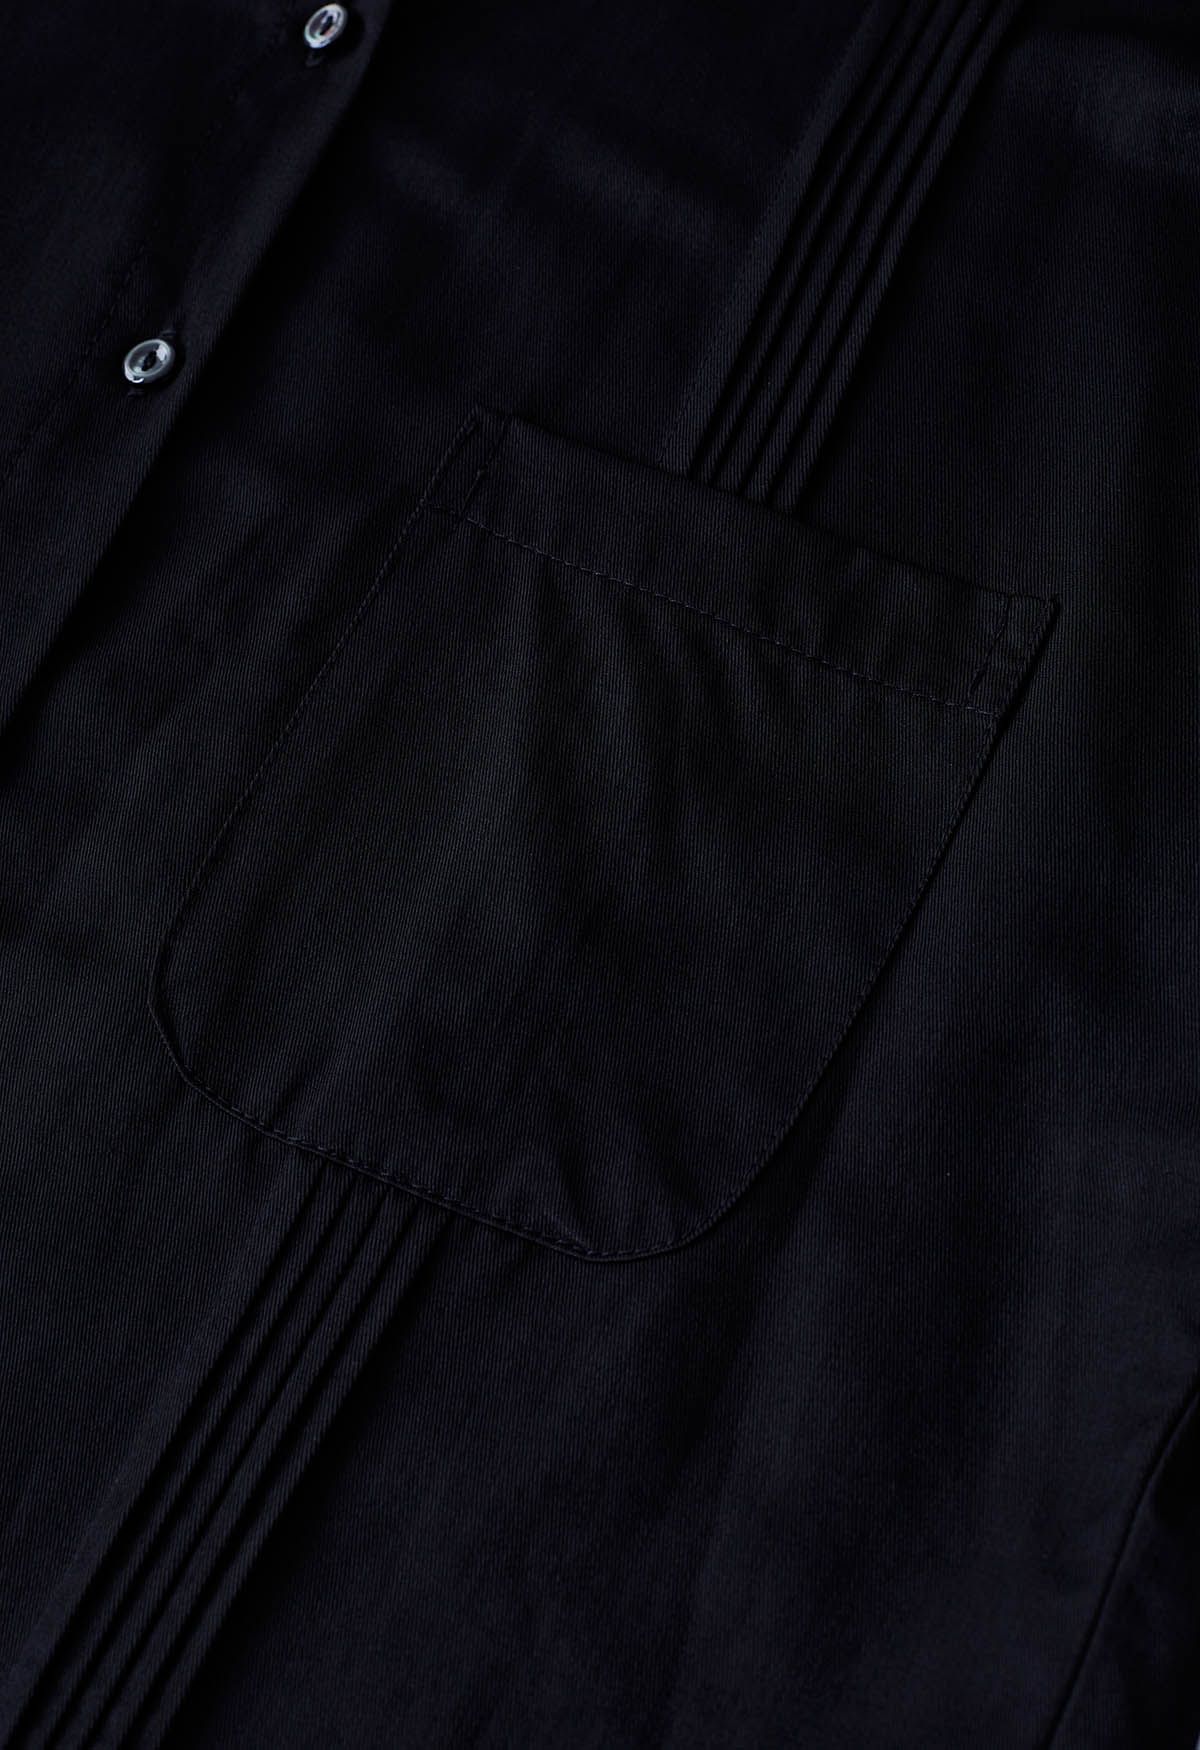 Sleek Pintuck Detail Button Down Shirt in Black - Retro, Indie and ...